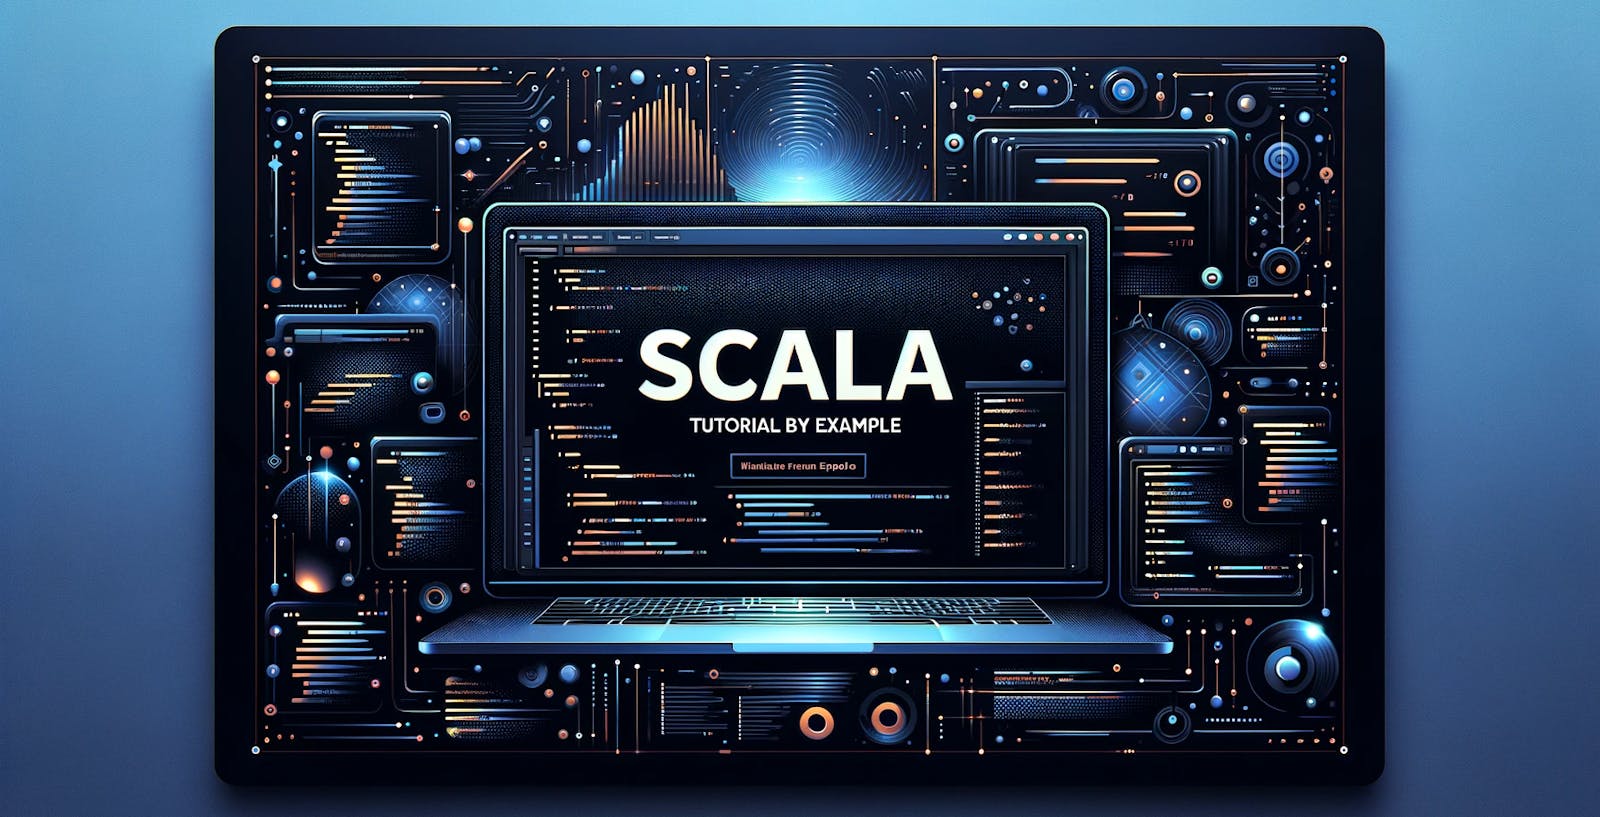 Scala Tutorial by Example - Platform free